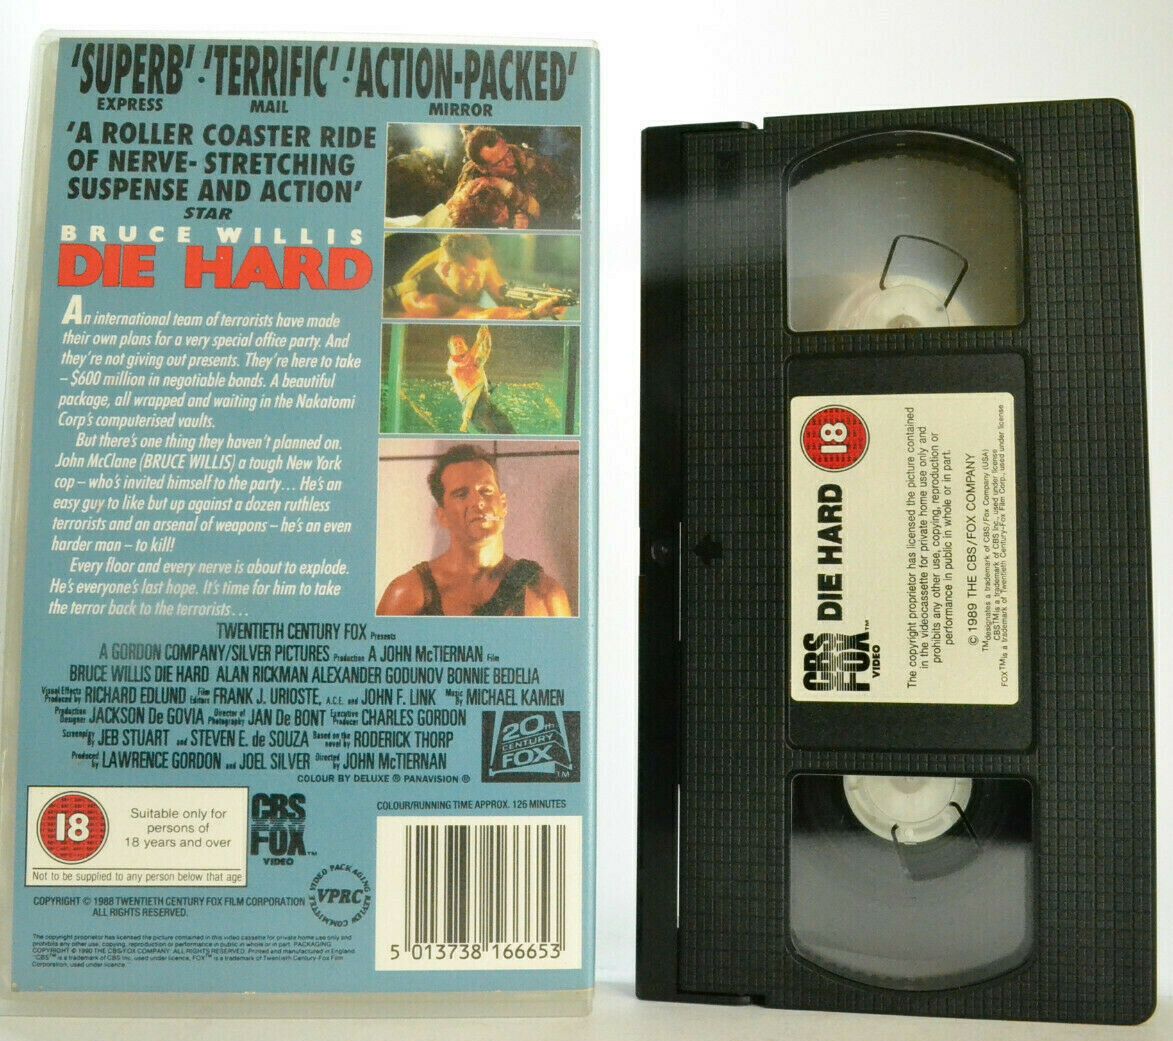 Die Hard (1988): First Home Release - Action - Bruce Willis/Alan Rickman - VHS-